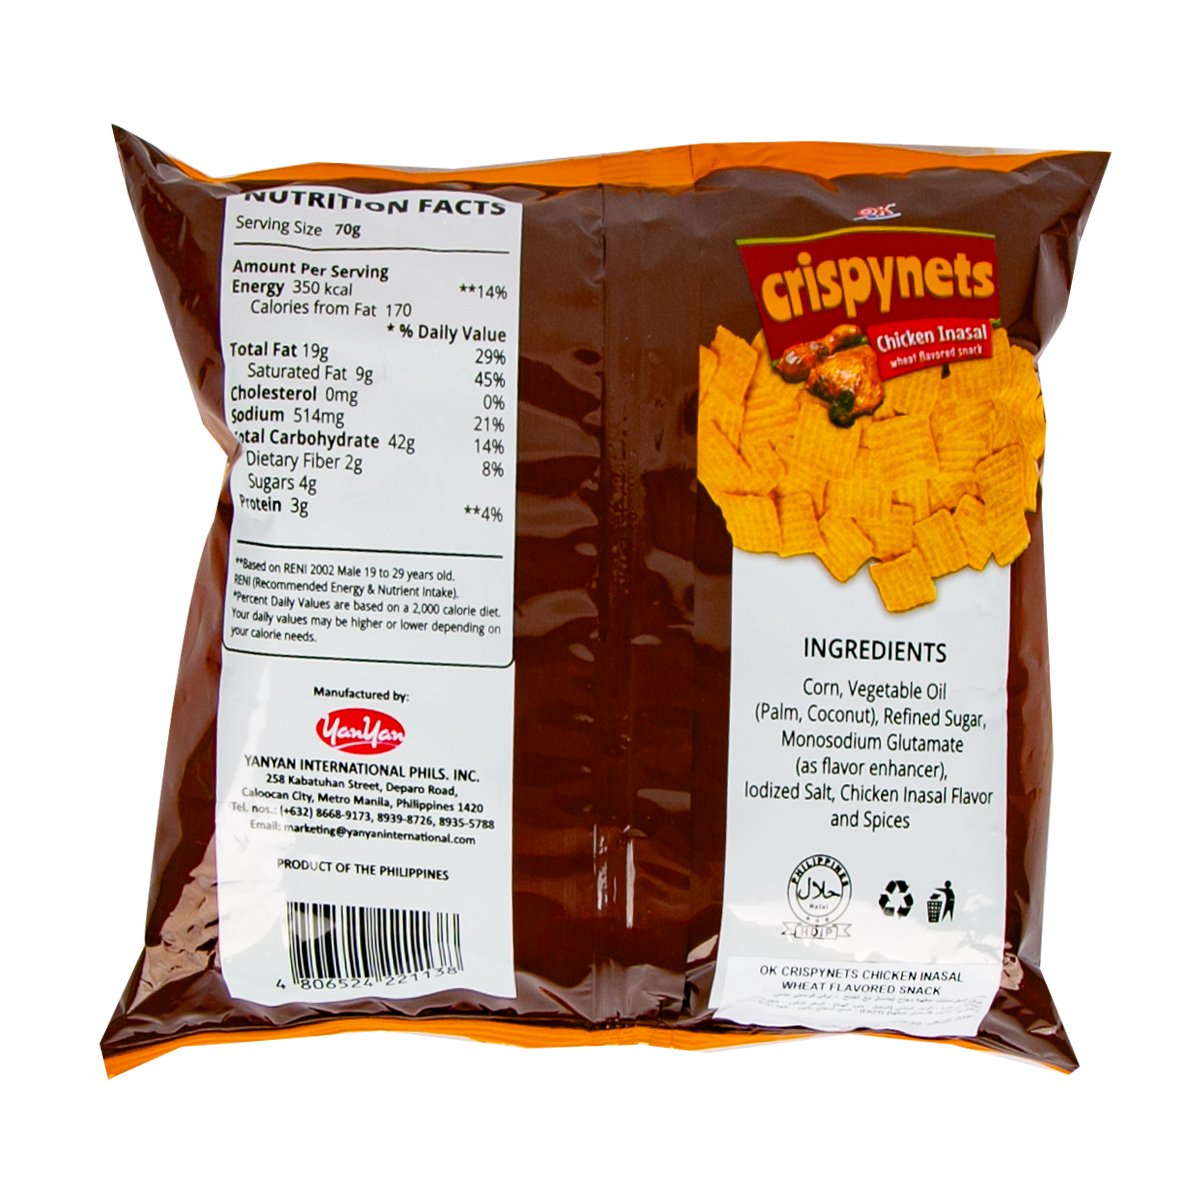 OK Crispynets Chicken Inasal Wheat Flavored Snack 70 g